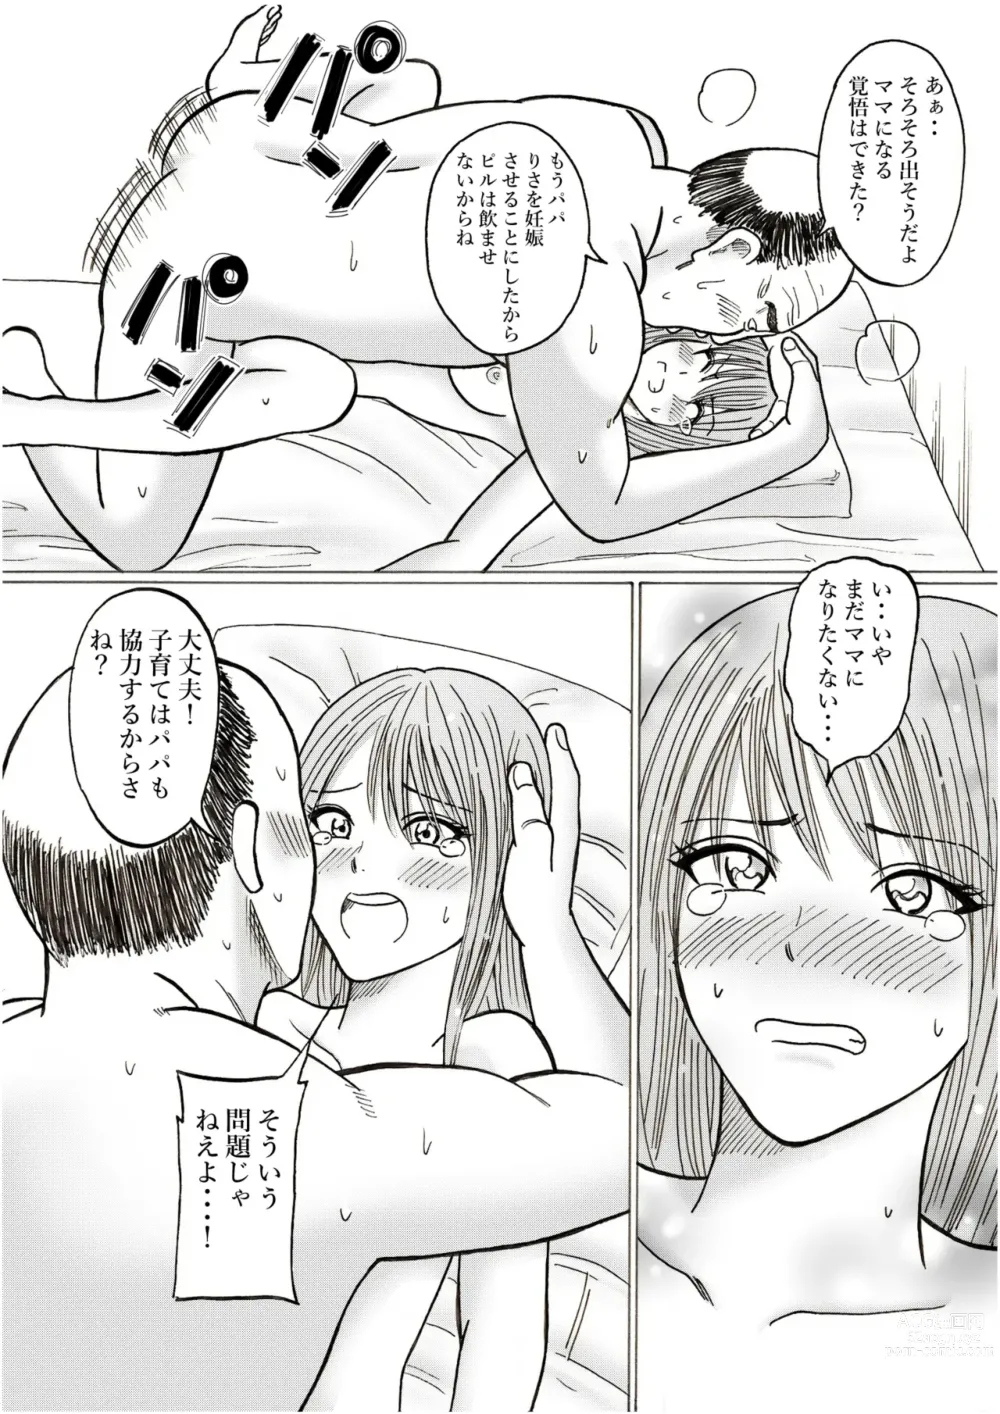 Page 38 of doujinshi Risato